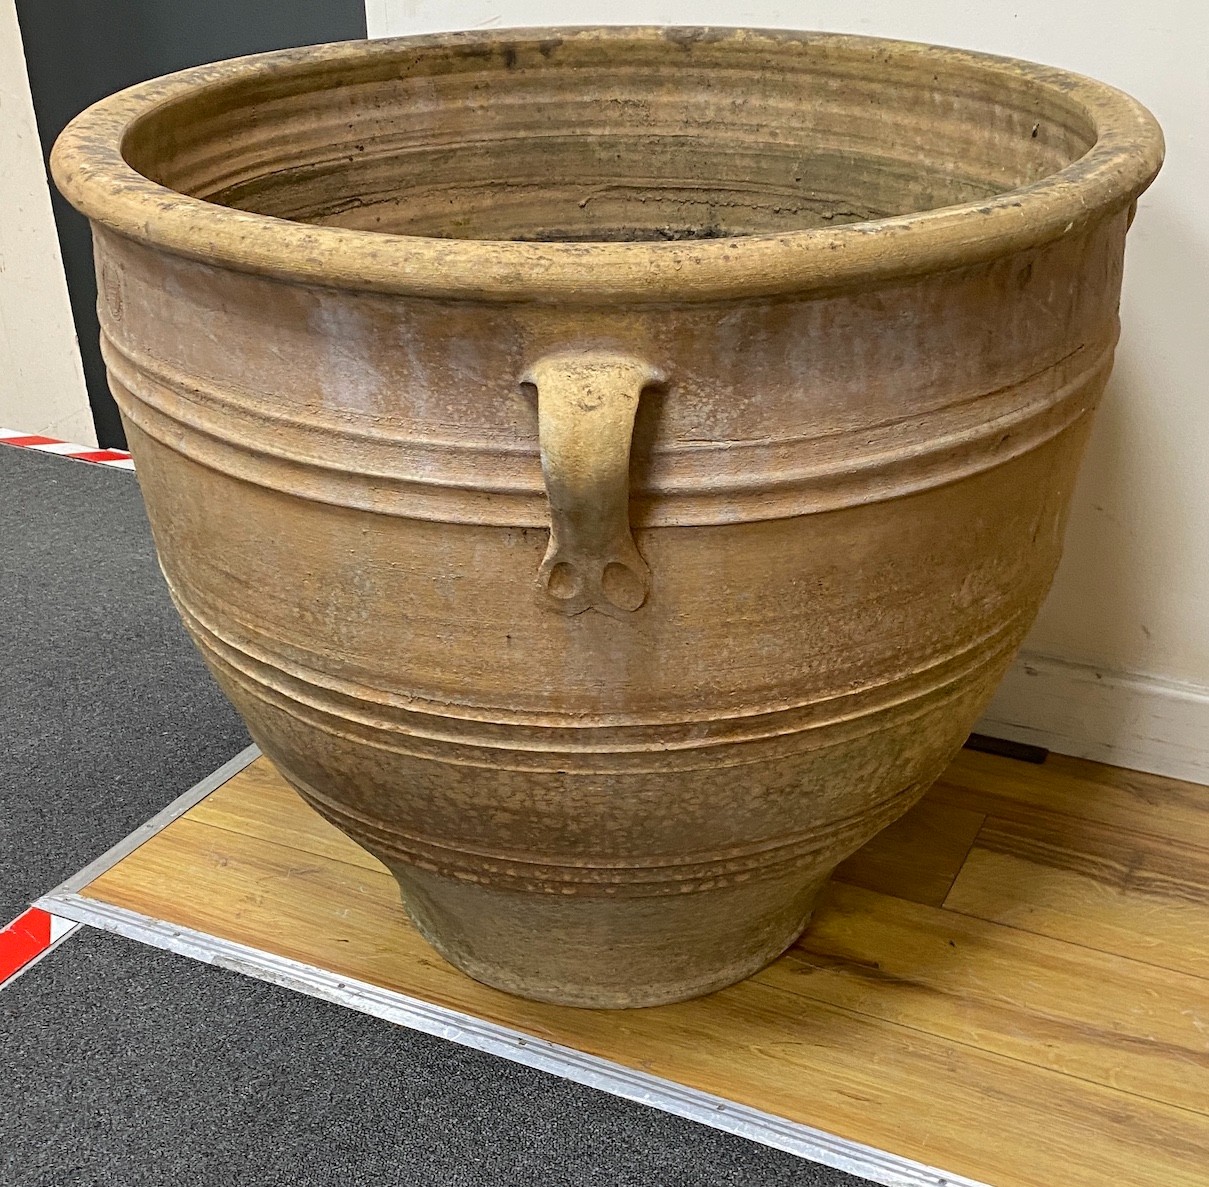 A large circular Grecian style earthenware garden urn, diameter 75cm, height 66cm